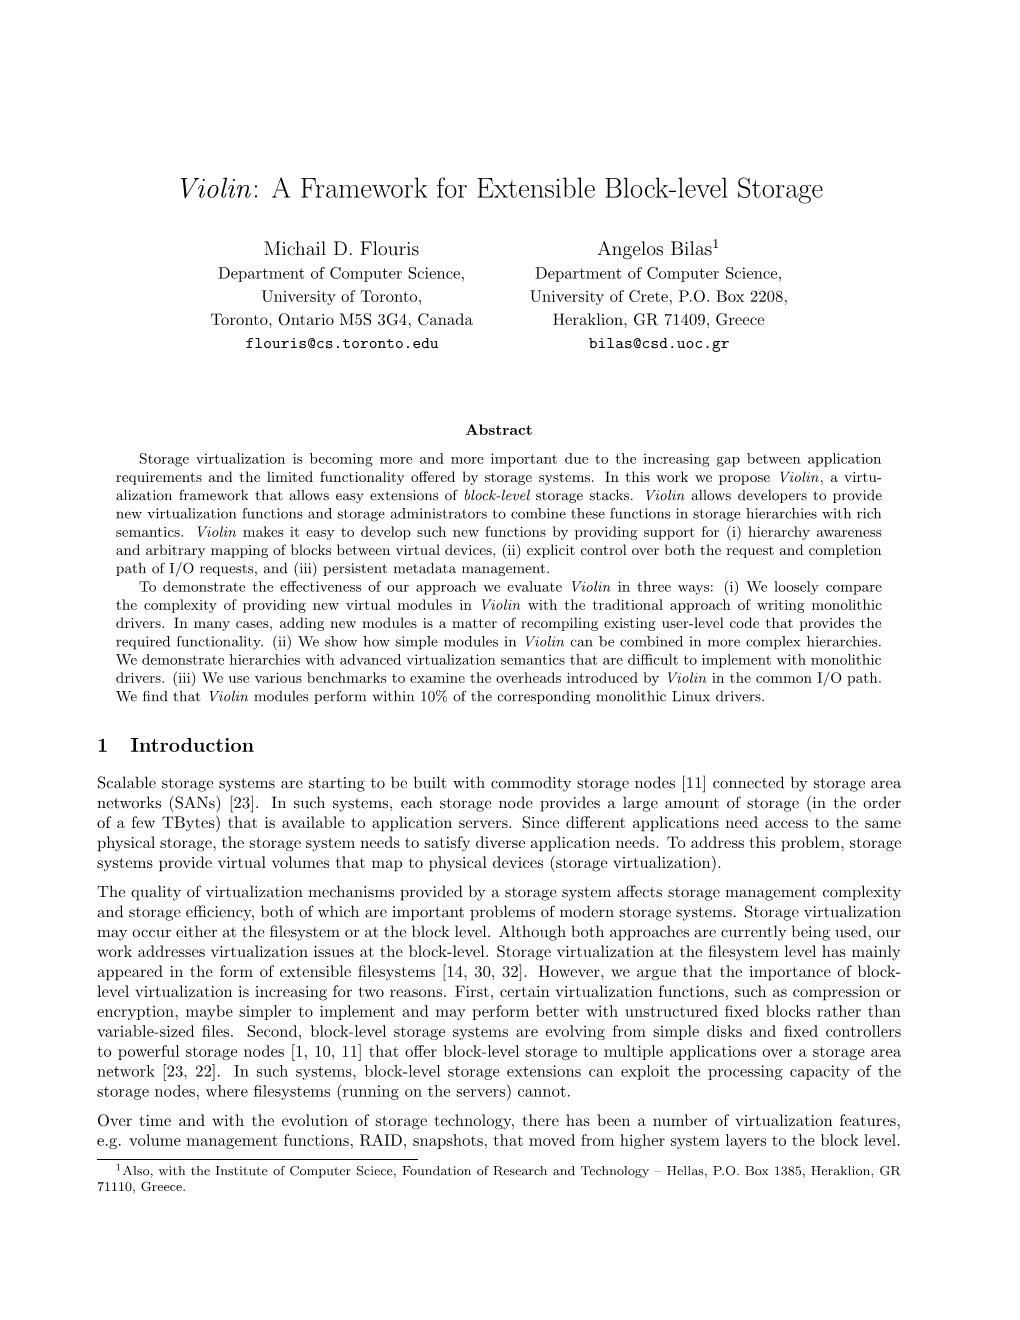 Violin: a Framework for Extensible Block-Level Storage